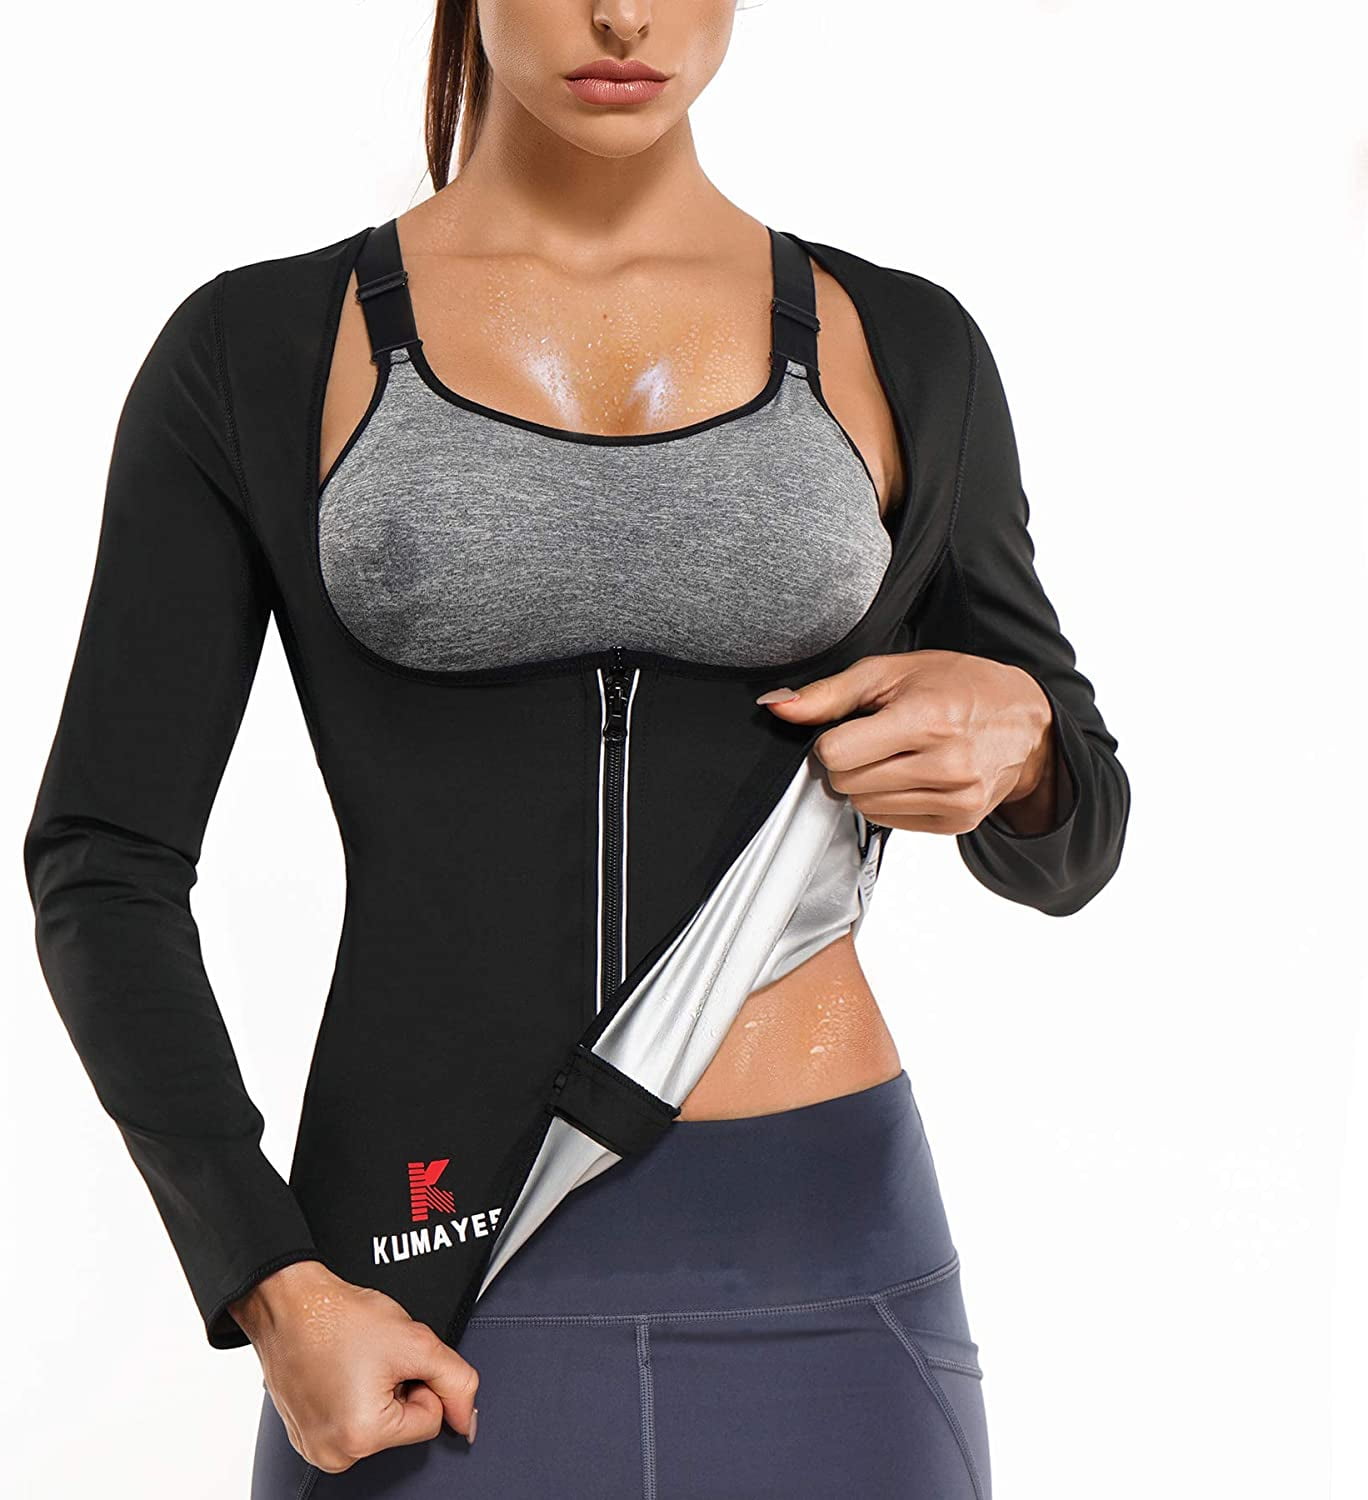 Sauna Suit for Women Weight Loss Suana Shirt for Women Sweat Suit Waist Trainer Vest Fitness Body Shaper Zipper 